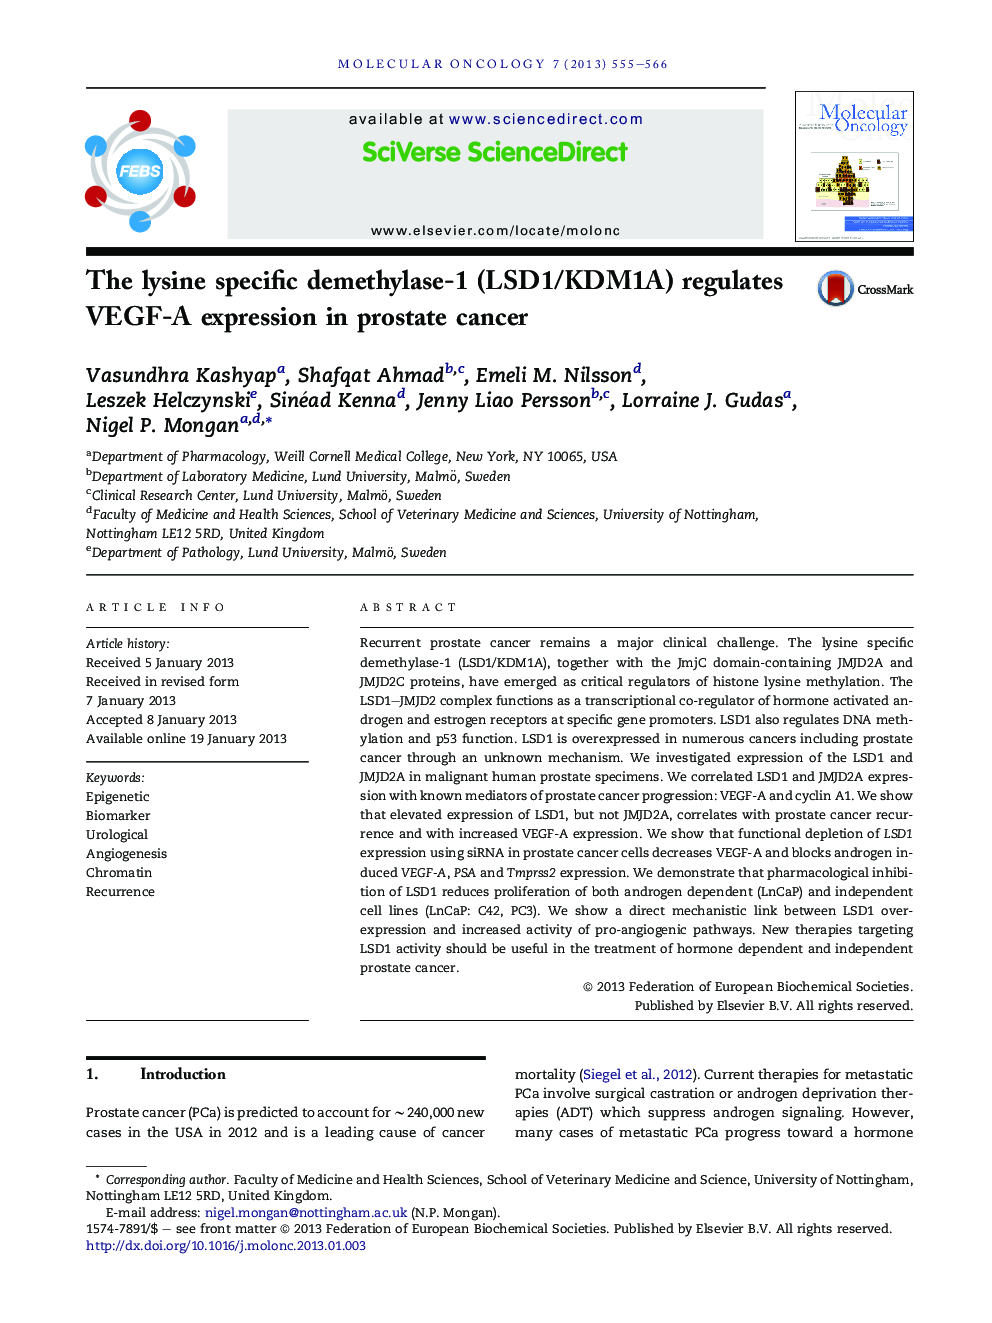 The lysine specific demethylase-1 (LSD1/KDM1A) regulates VEGF-A expression in prostate cancer